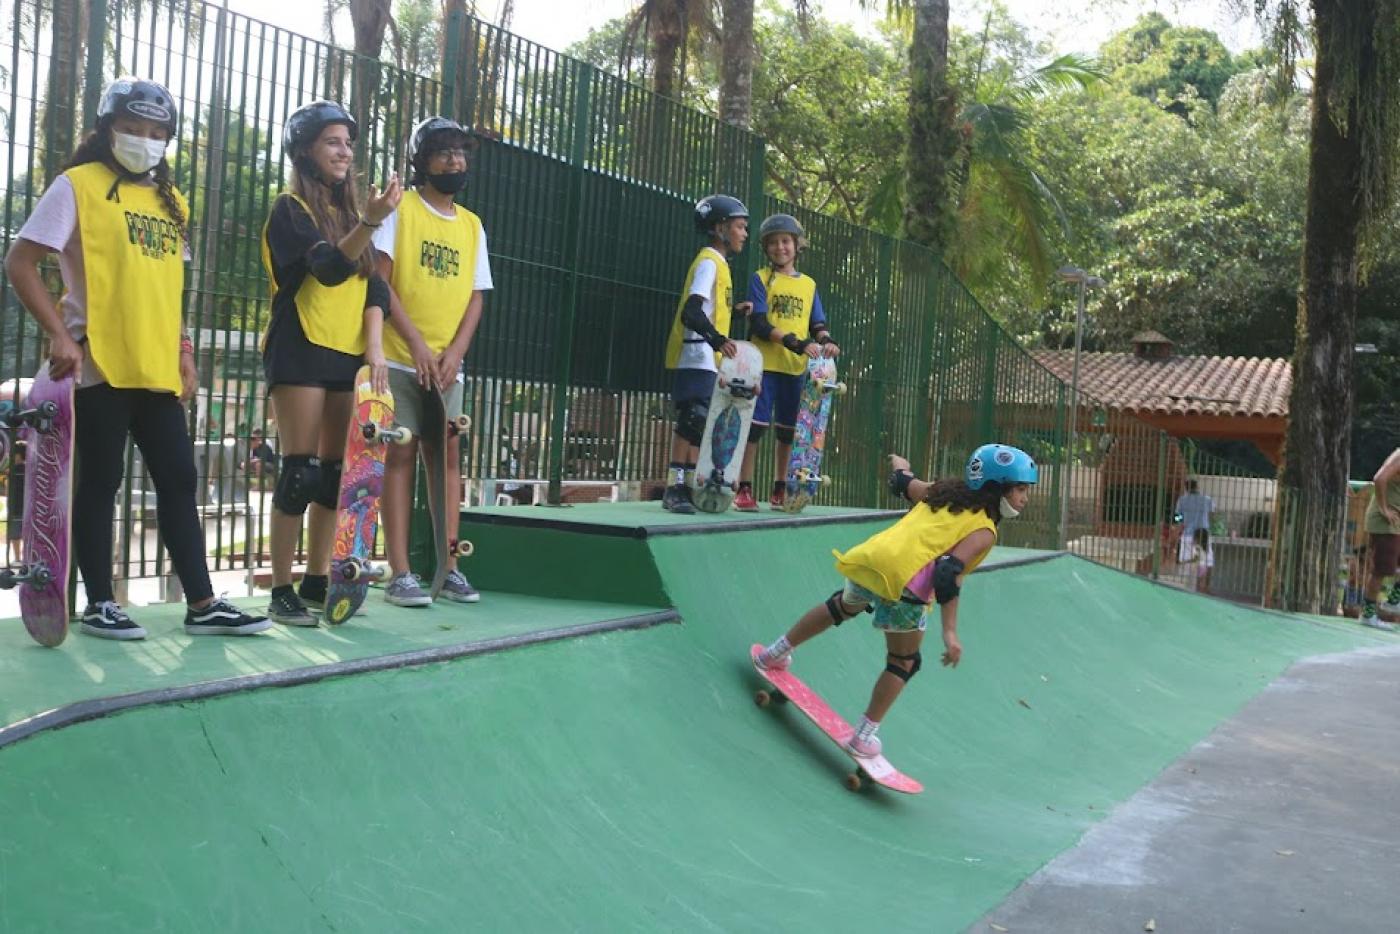 Santos abre 150 vagas para escola de skate gratuita